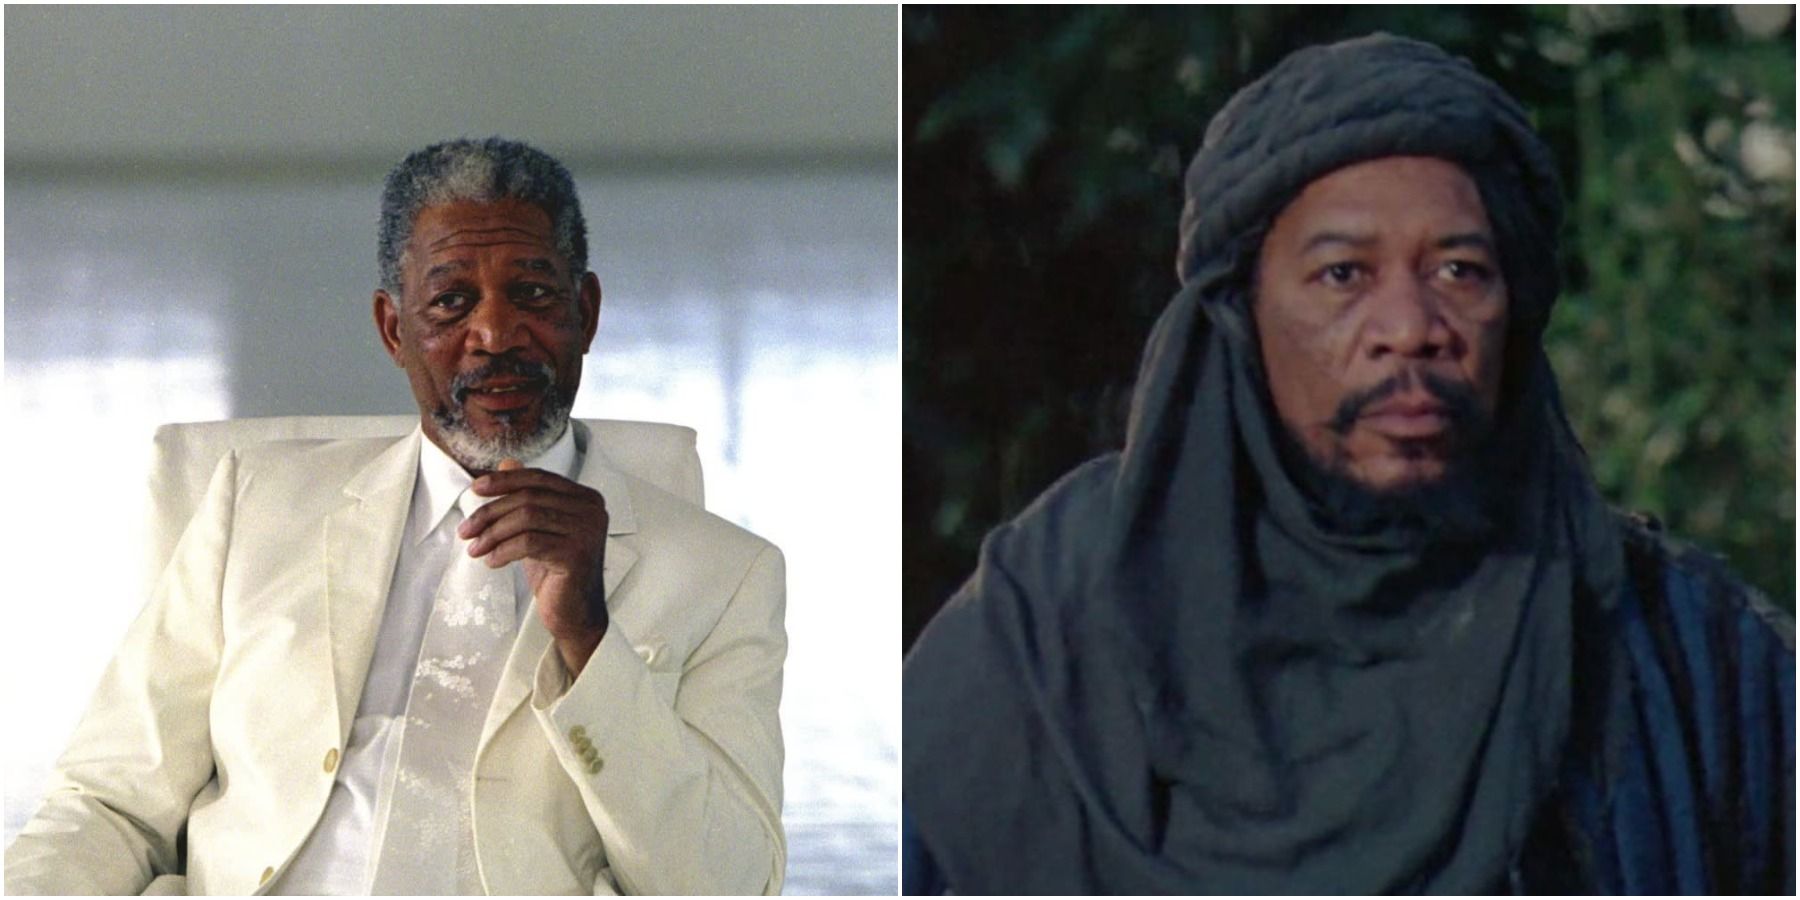 Morgan Freeman, featured image